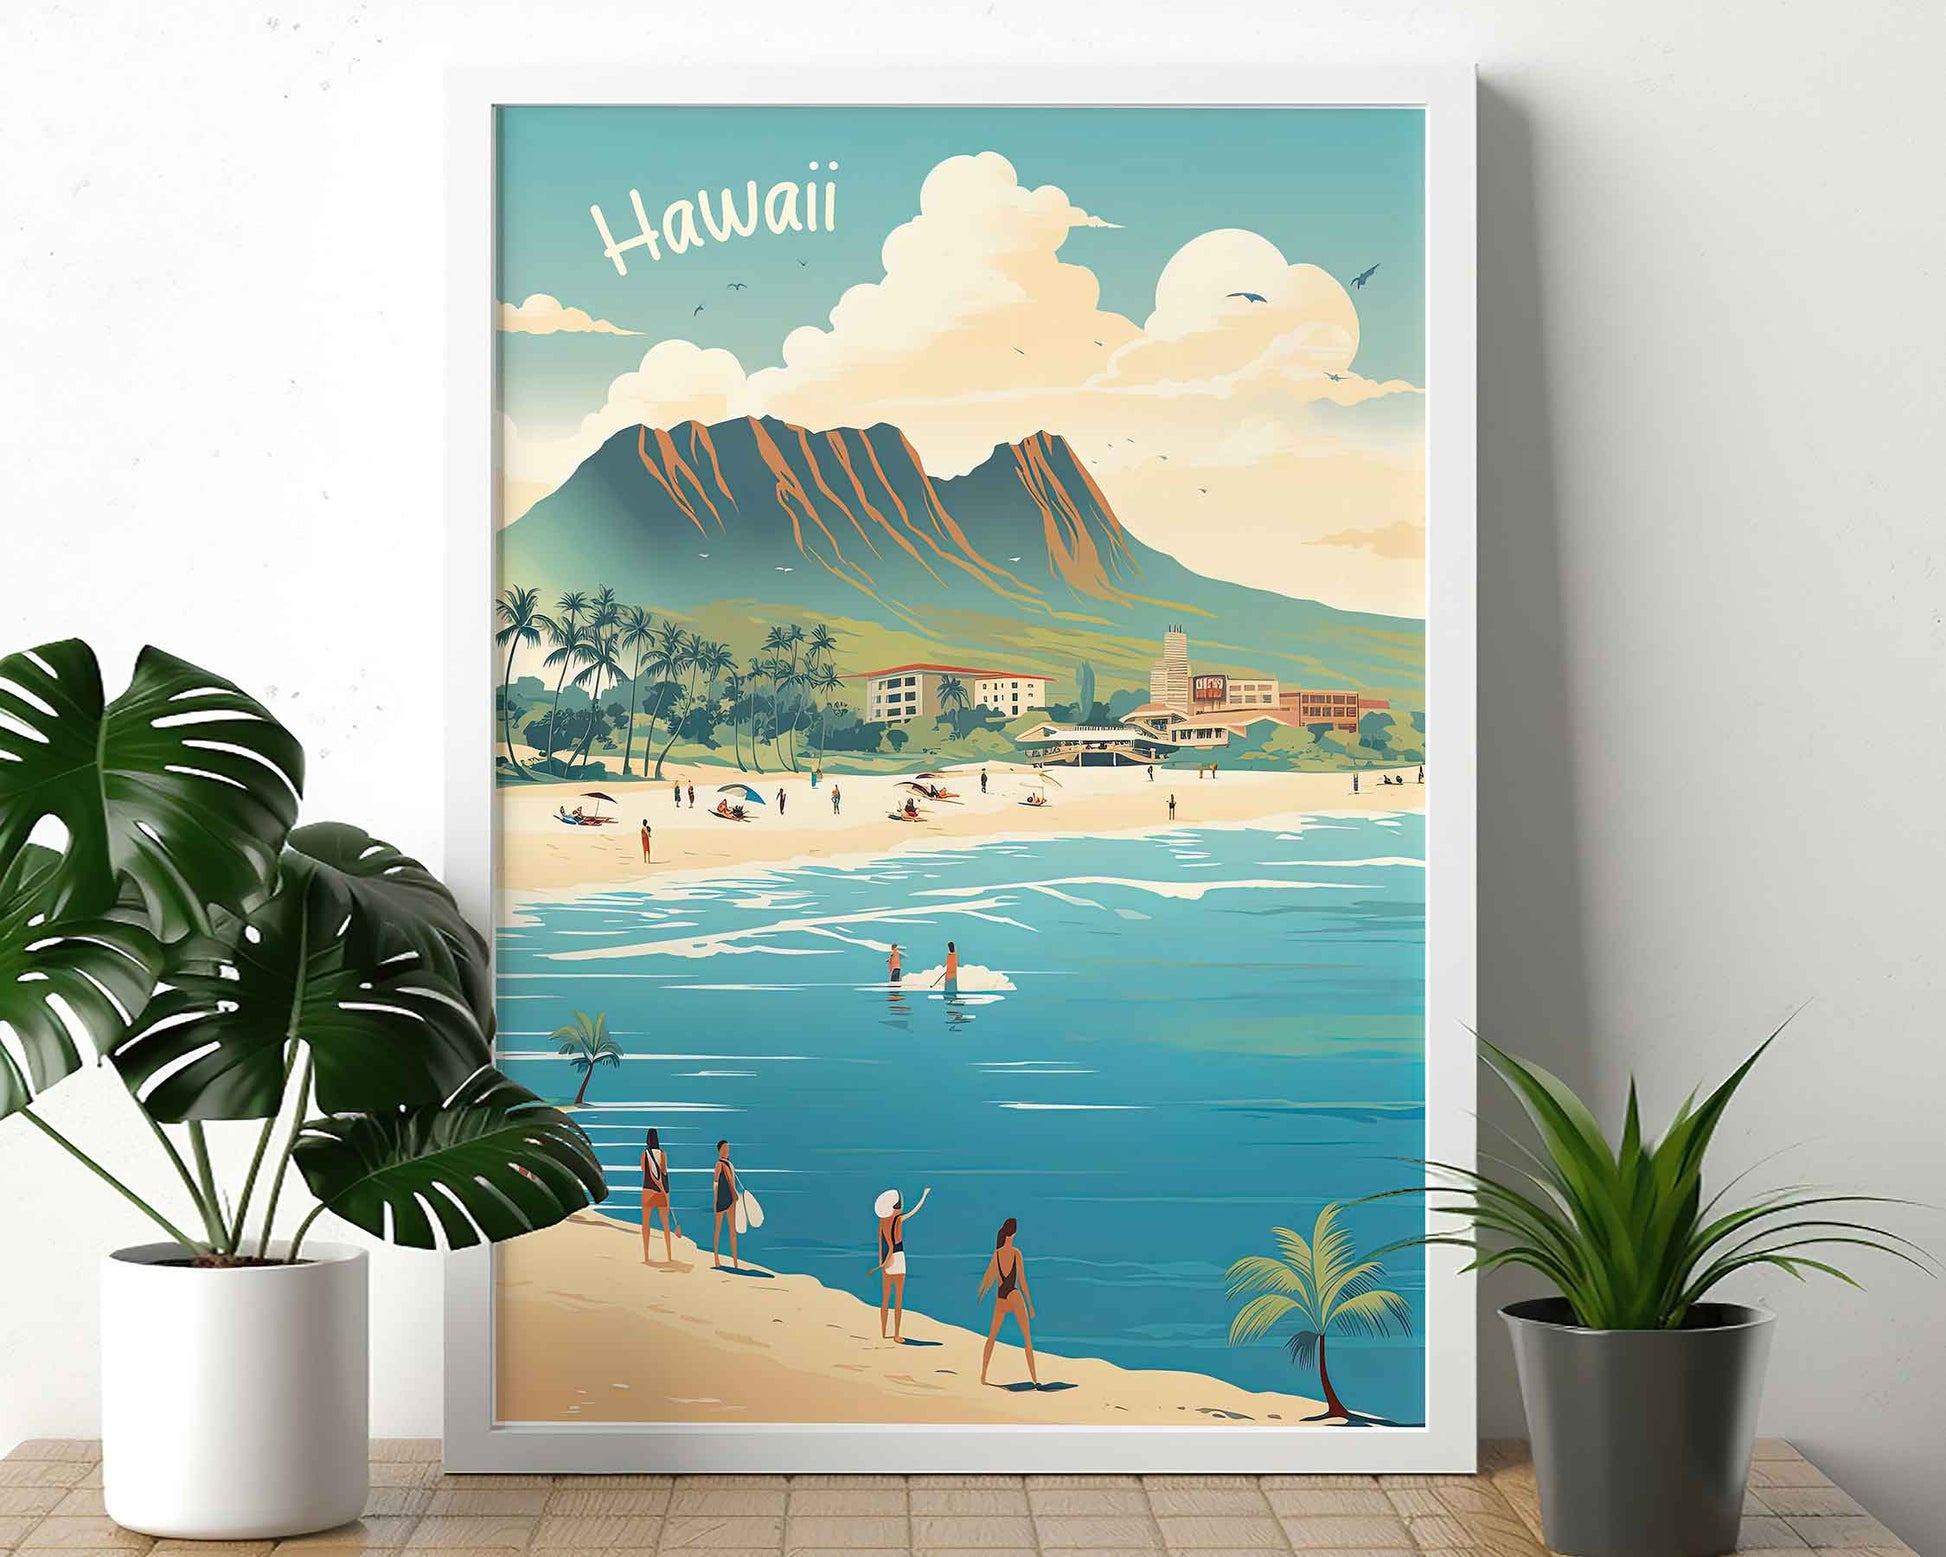 Framed Image of Oahu Hawaii Wall Art Travel Poster Prints Illustration